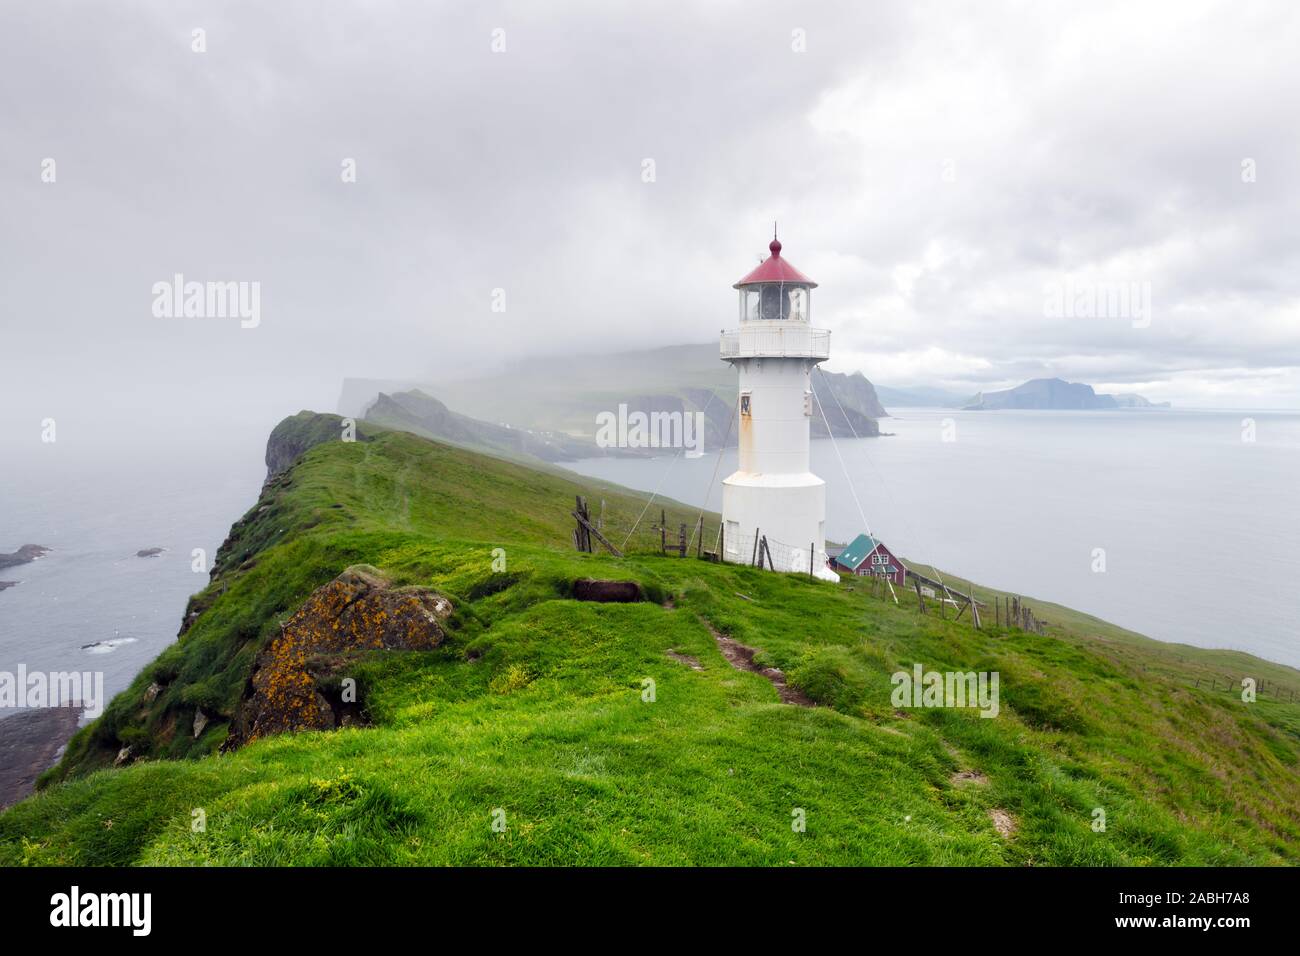 Foggy view of old lighthouse on the Mykines island, Faroe islands, Denmark. Landscape photography Stock Photo